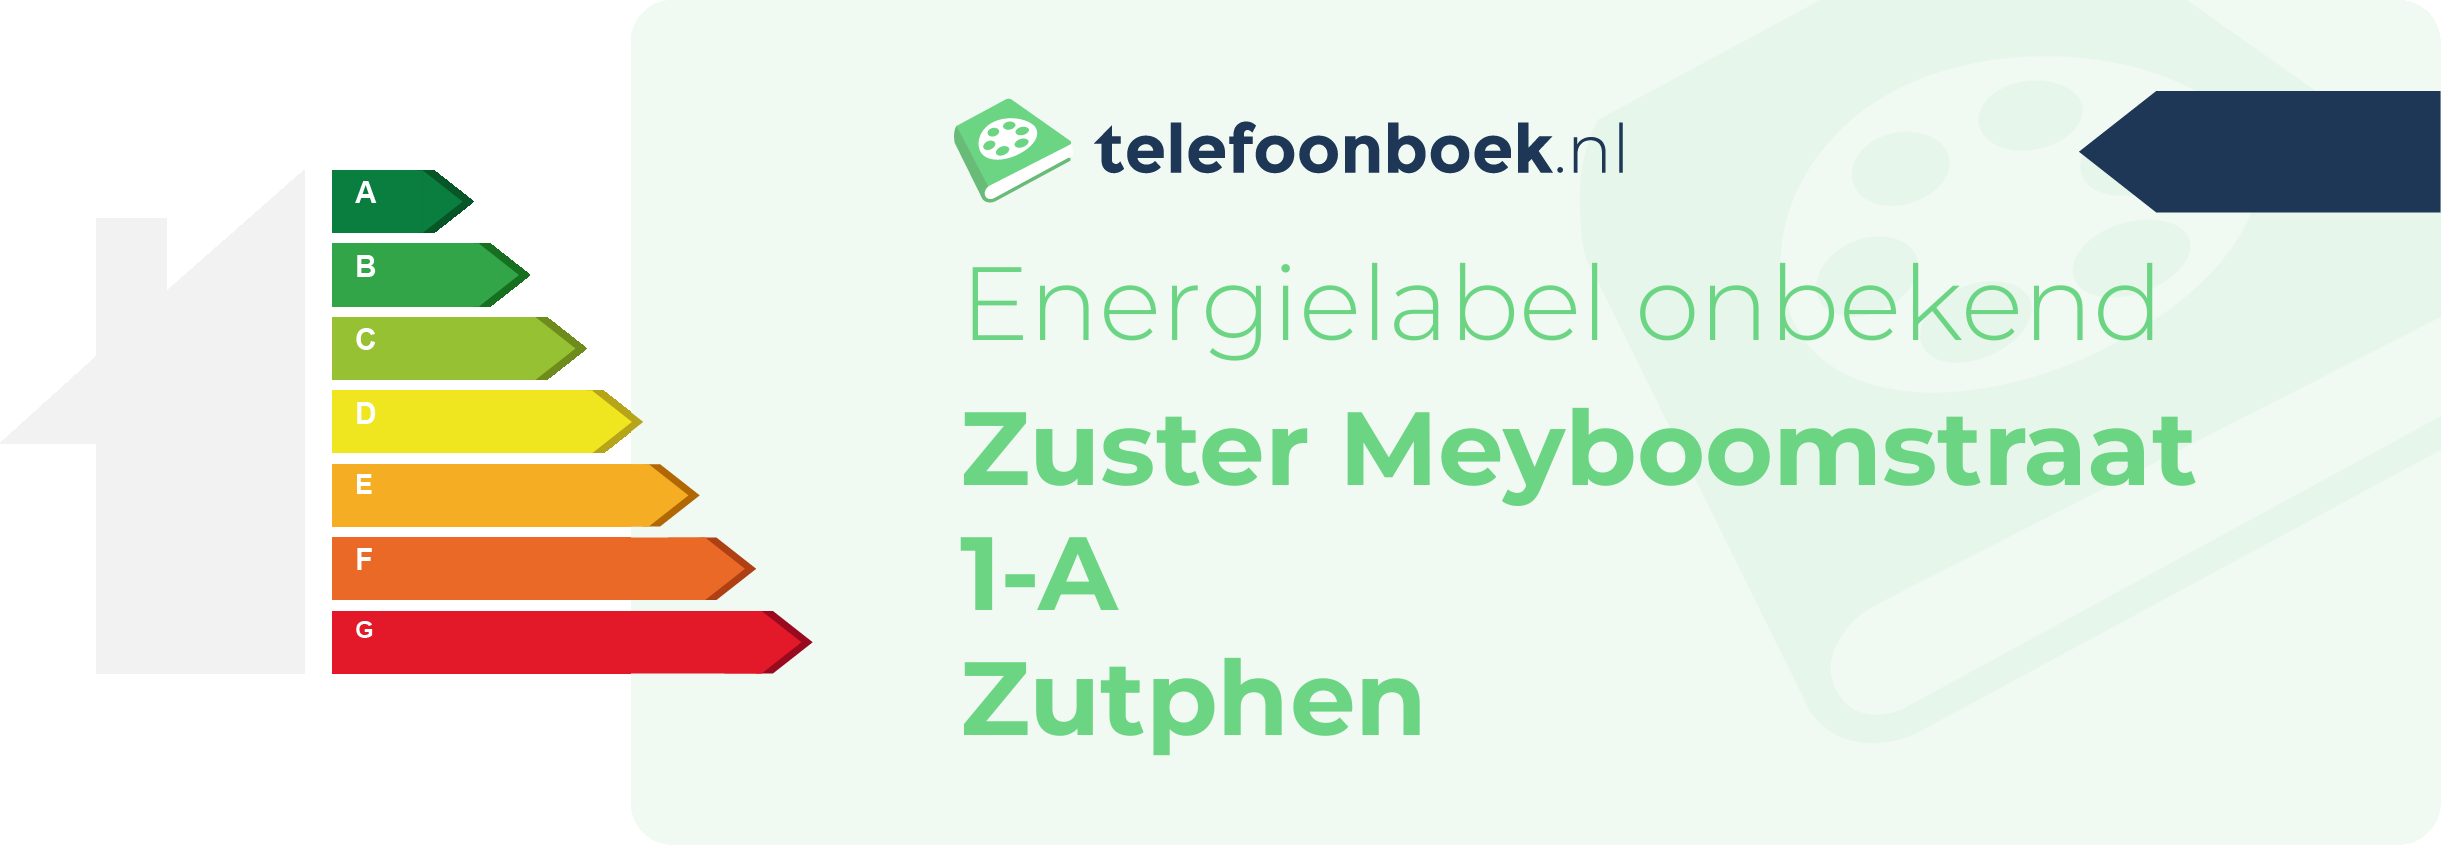 Energielabel Zuster Meyboomstraat 1-A Zutphen